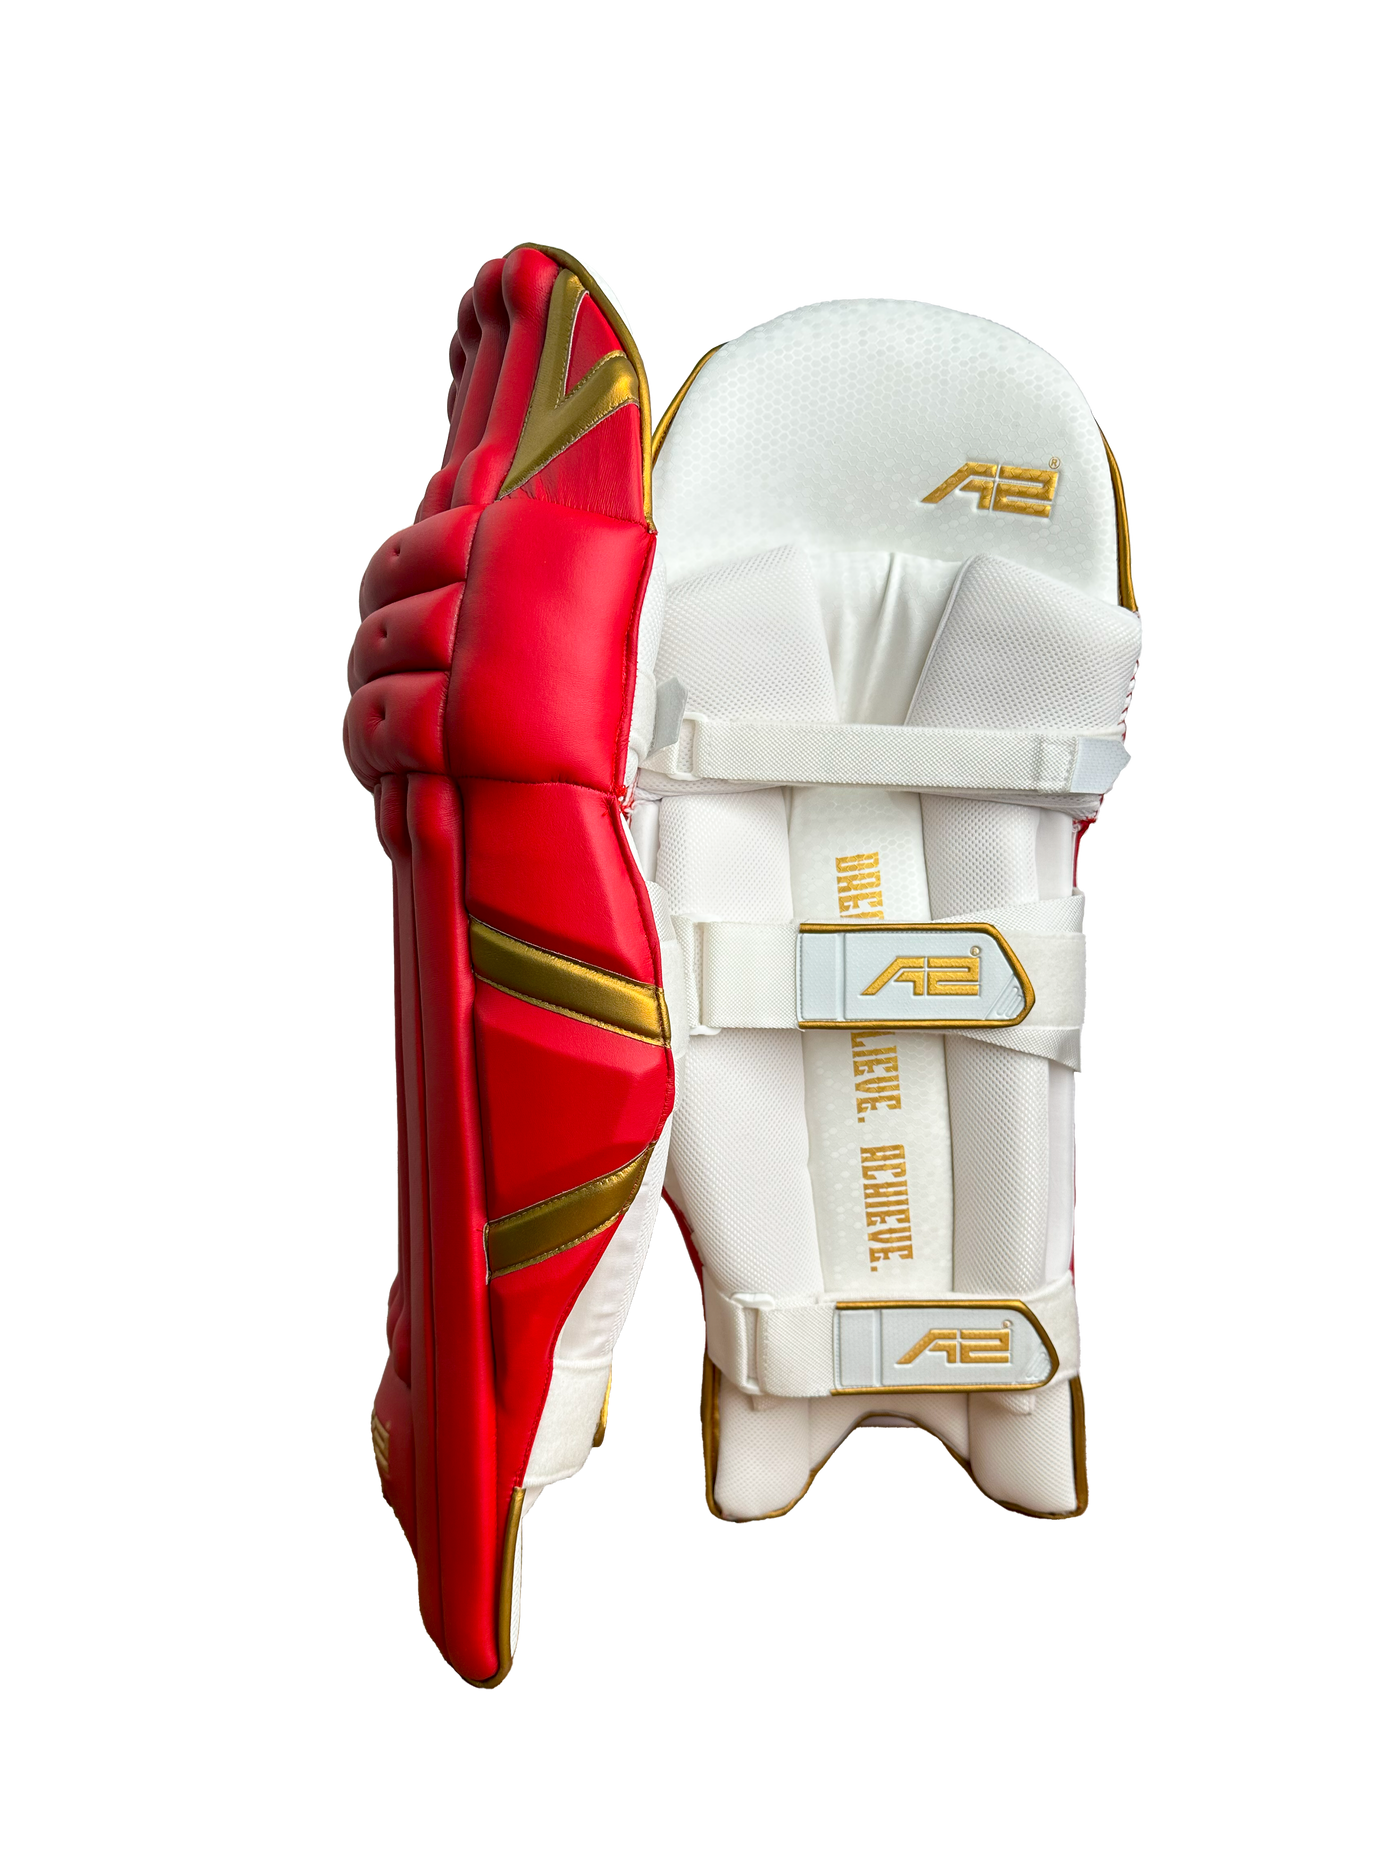 Cricket Batting Pads - Red & Golden